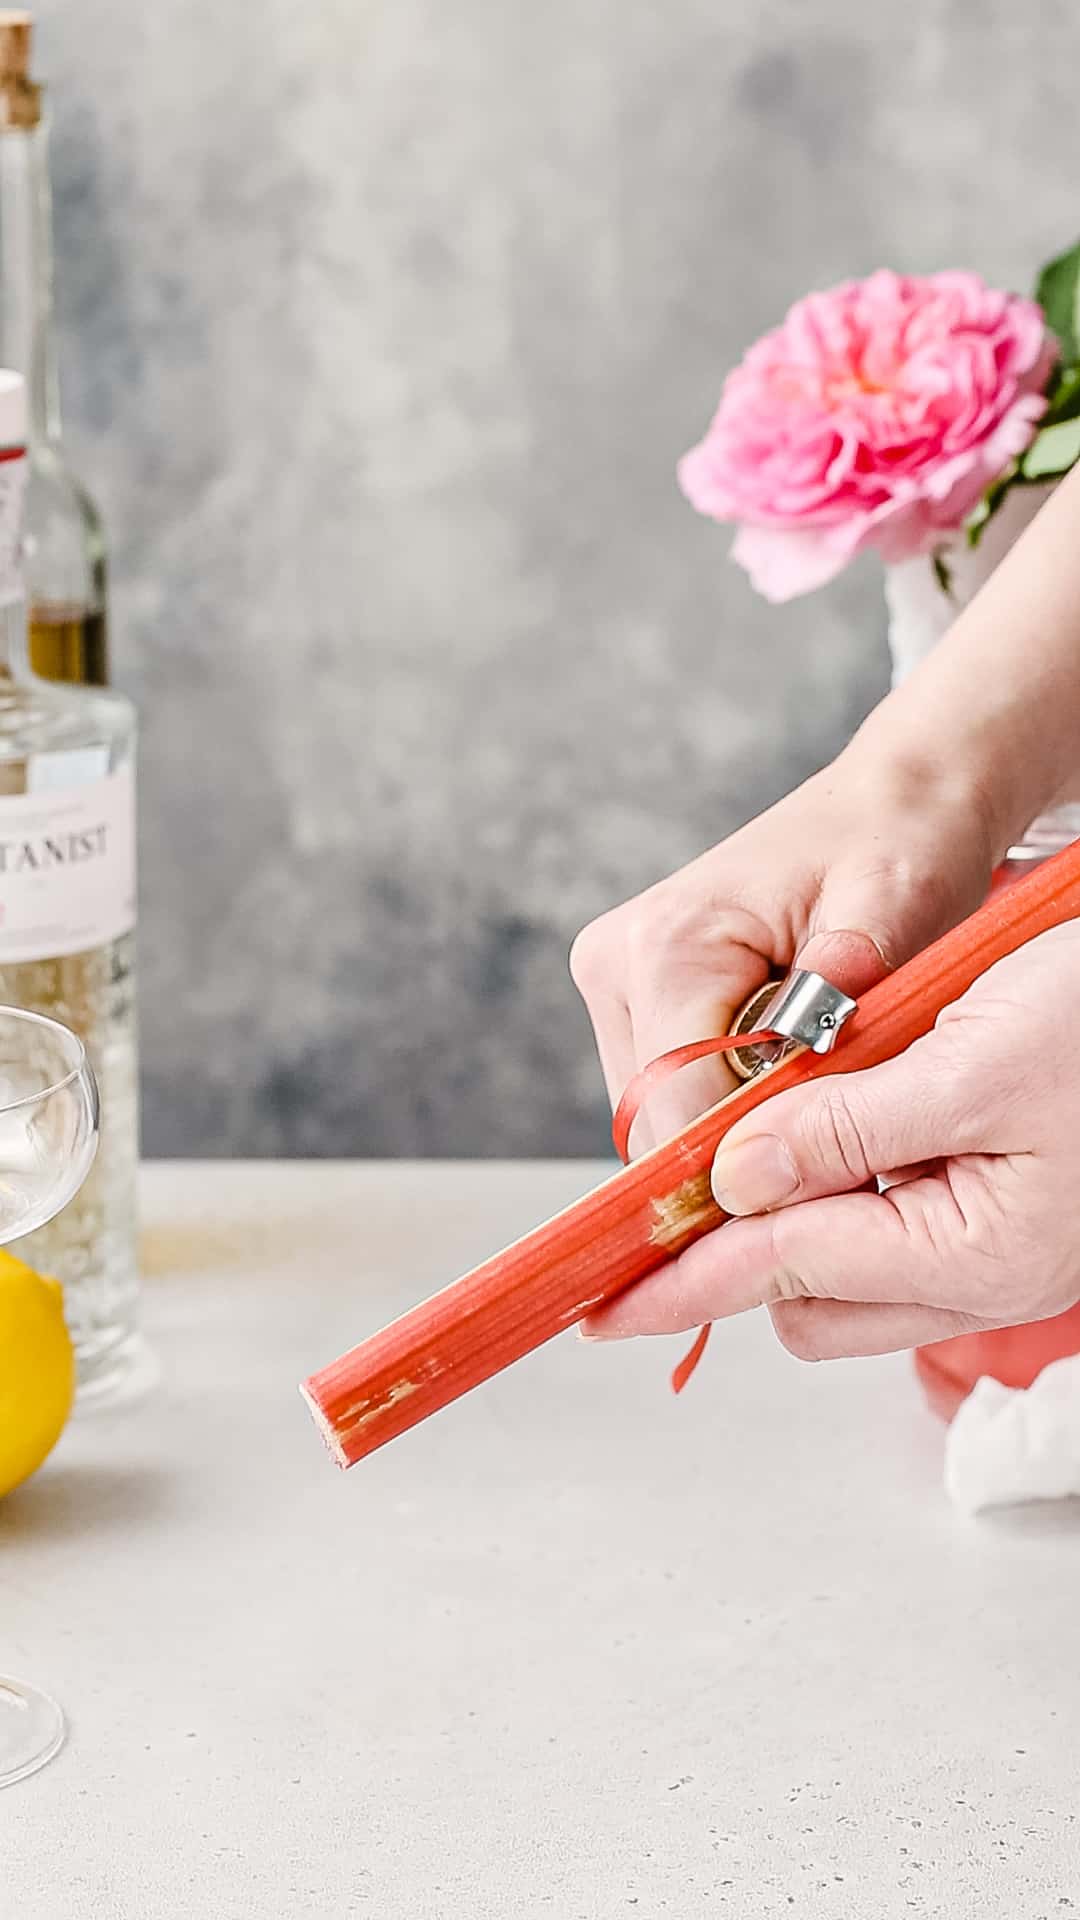 Hand using a vegetable peeler to peel off a strip of rhubarb skin.